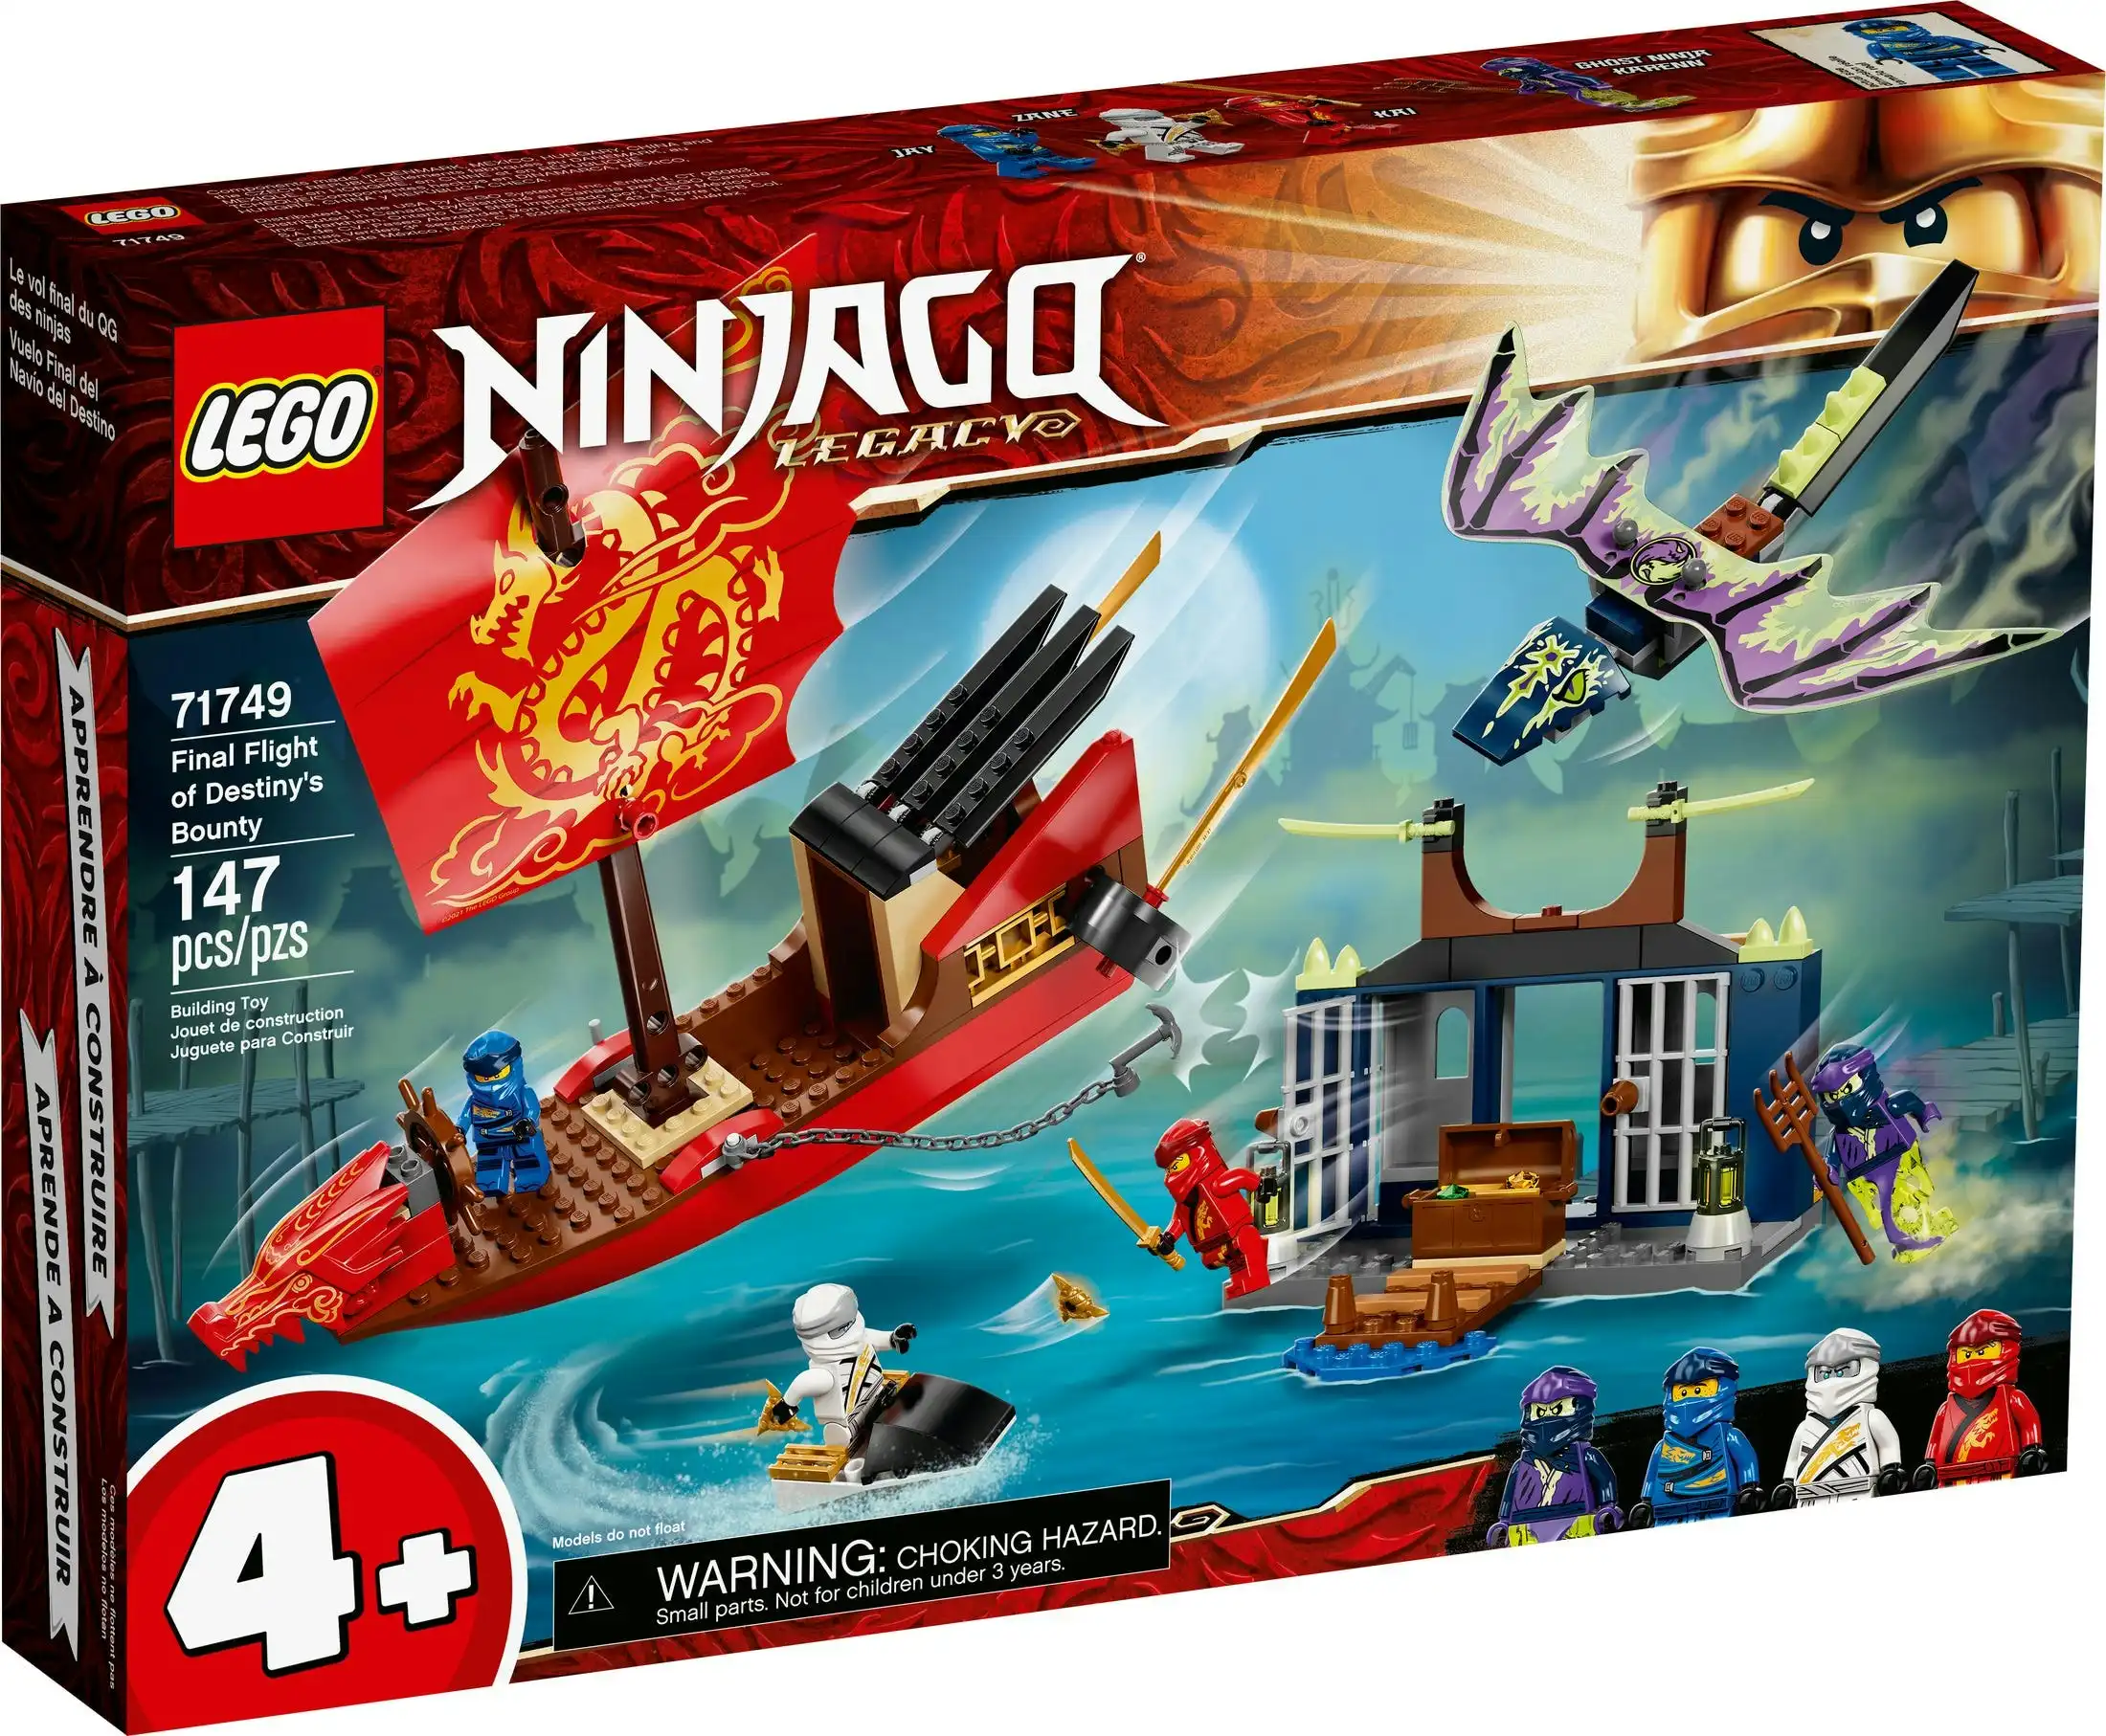 LEGO 71749 Final Flight of Destiny's Bounty - Ninjago 4+